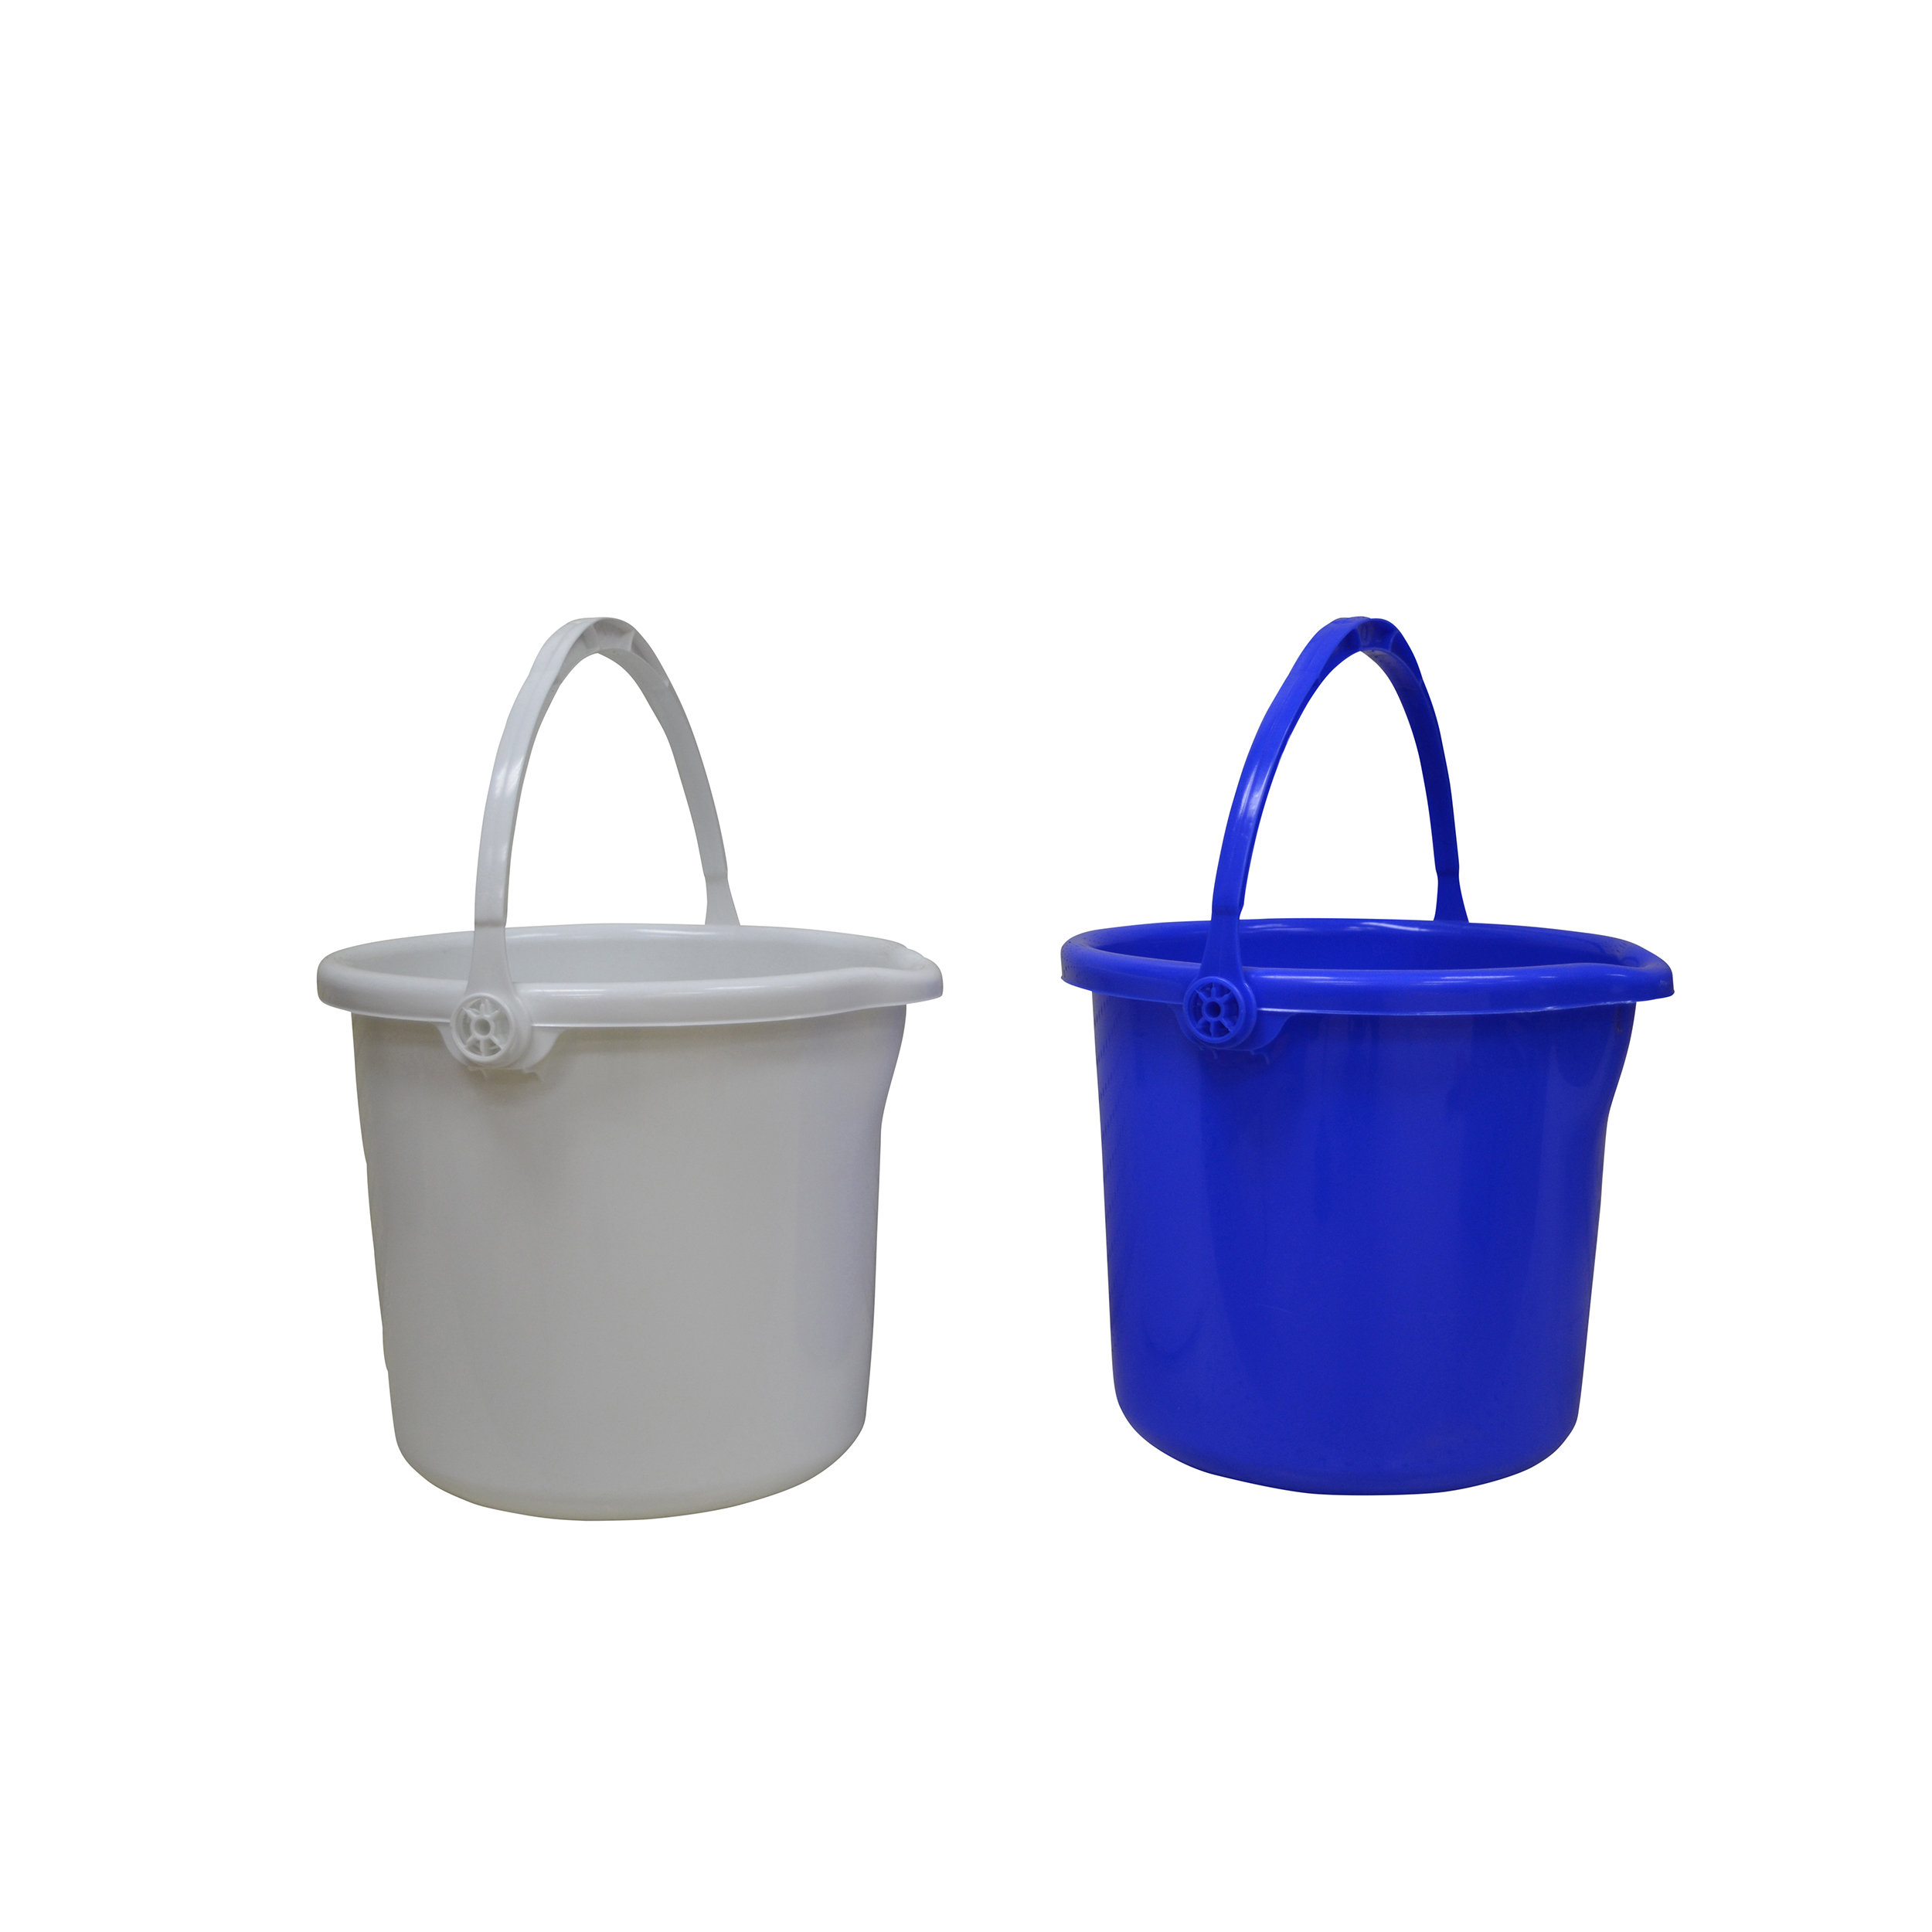 IMUSA IMUSA Cleaning Bucket 13 Liters, Blue/Tan/White - IMUSA